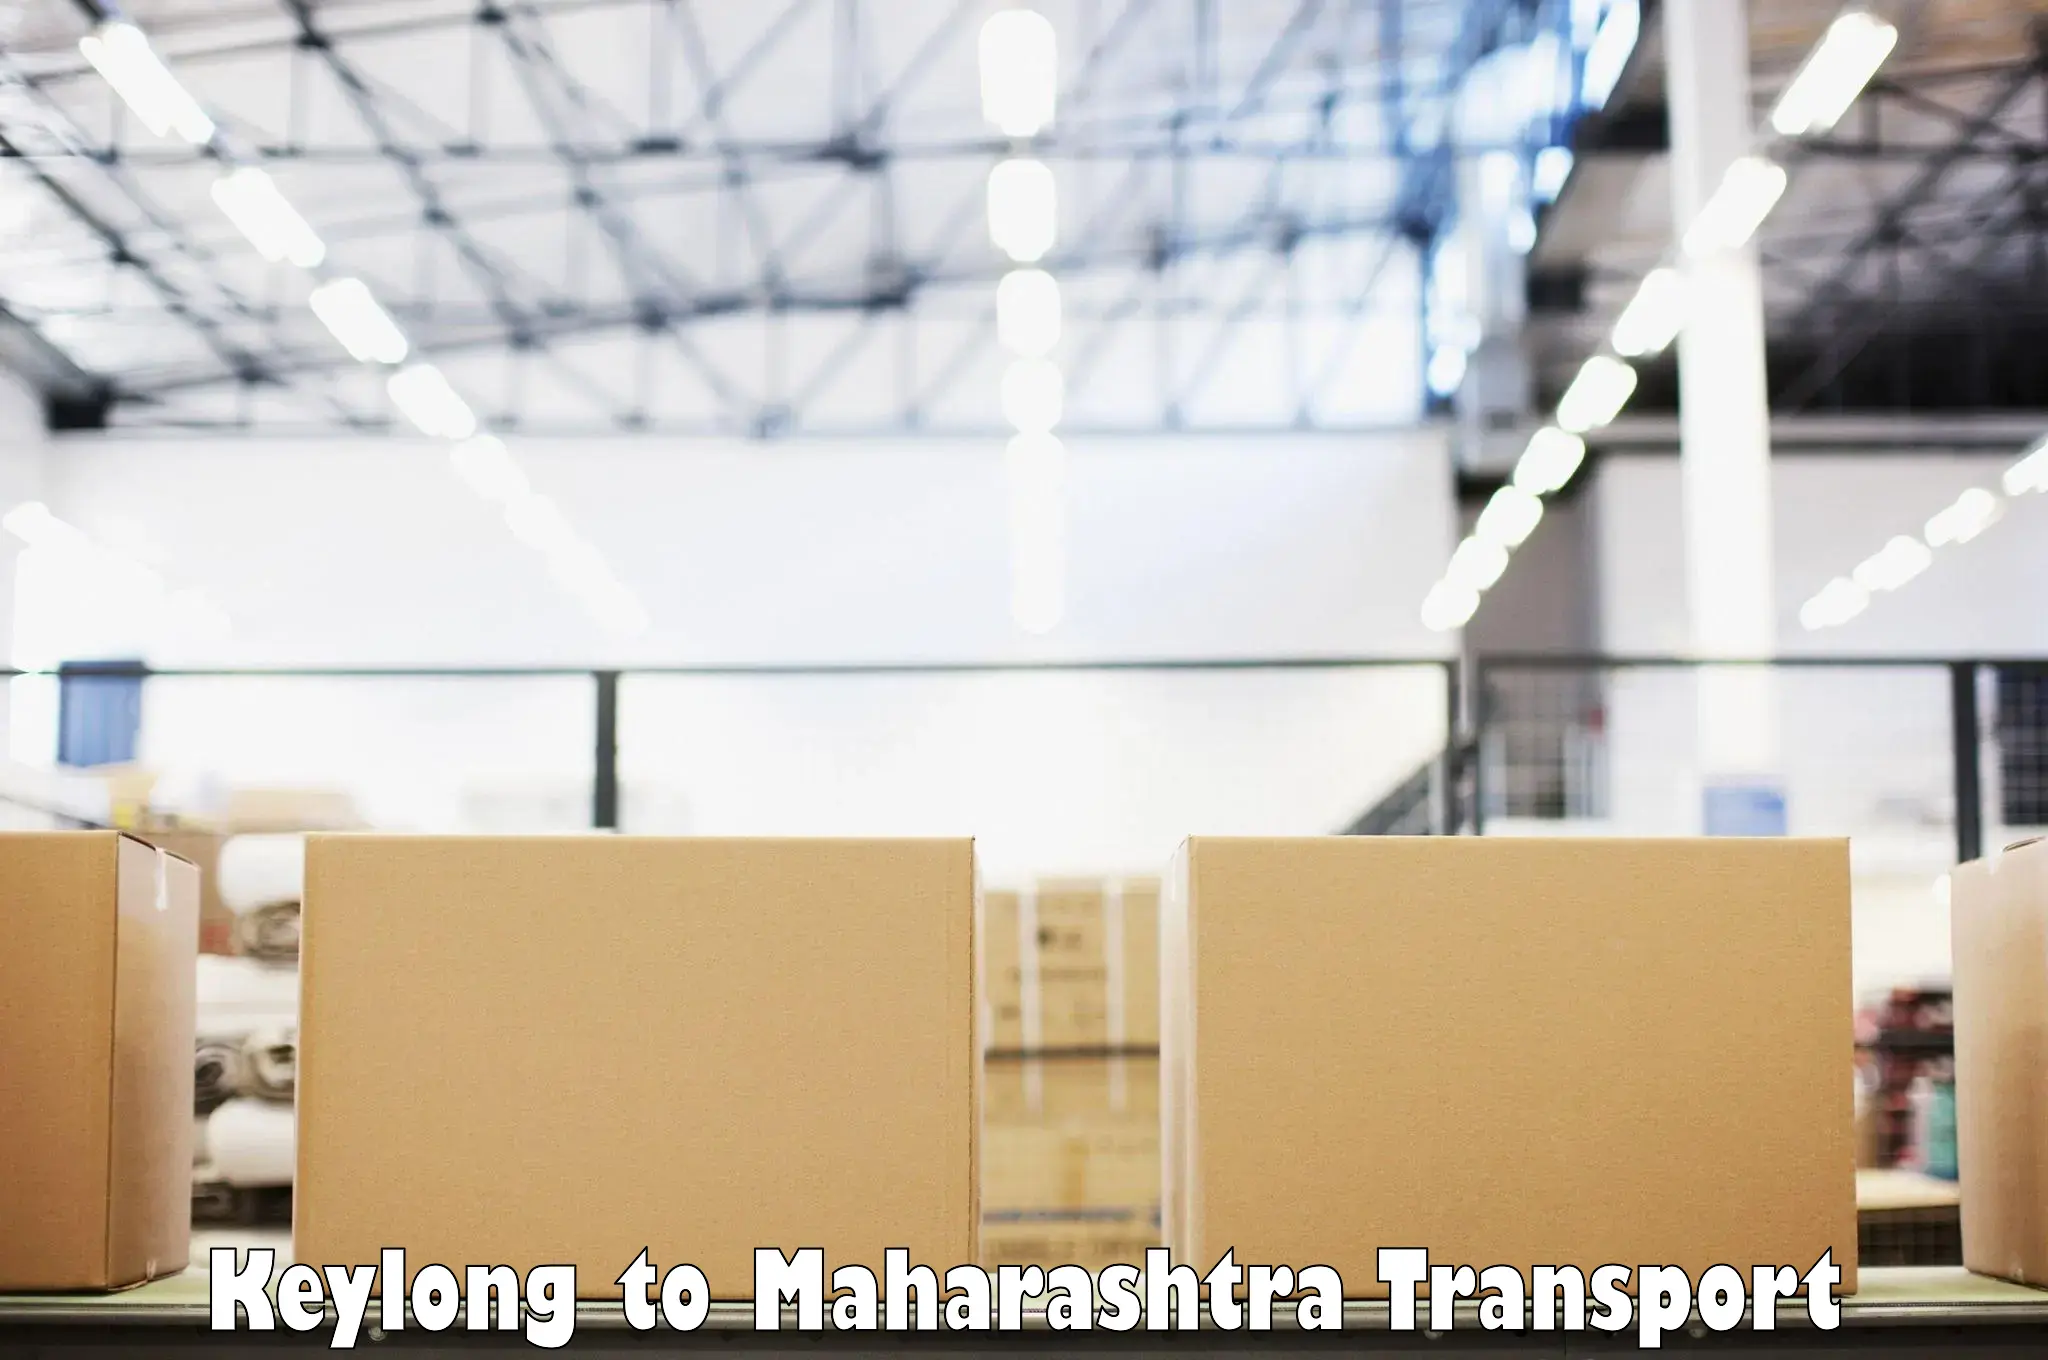 Commercial transport service Keylong to Khandala Pune